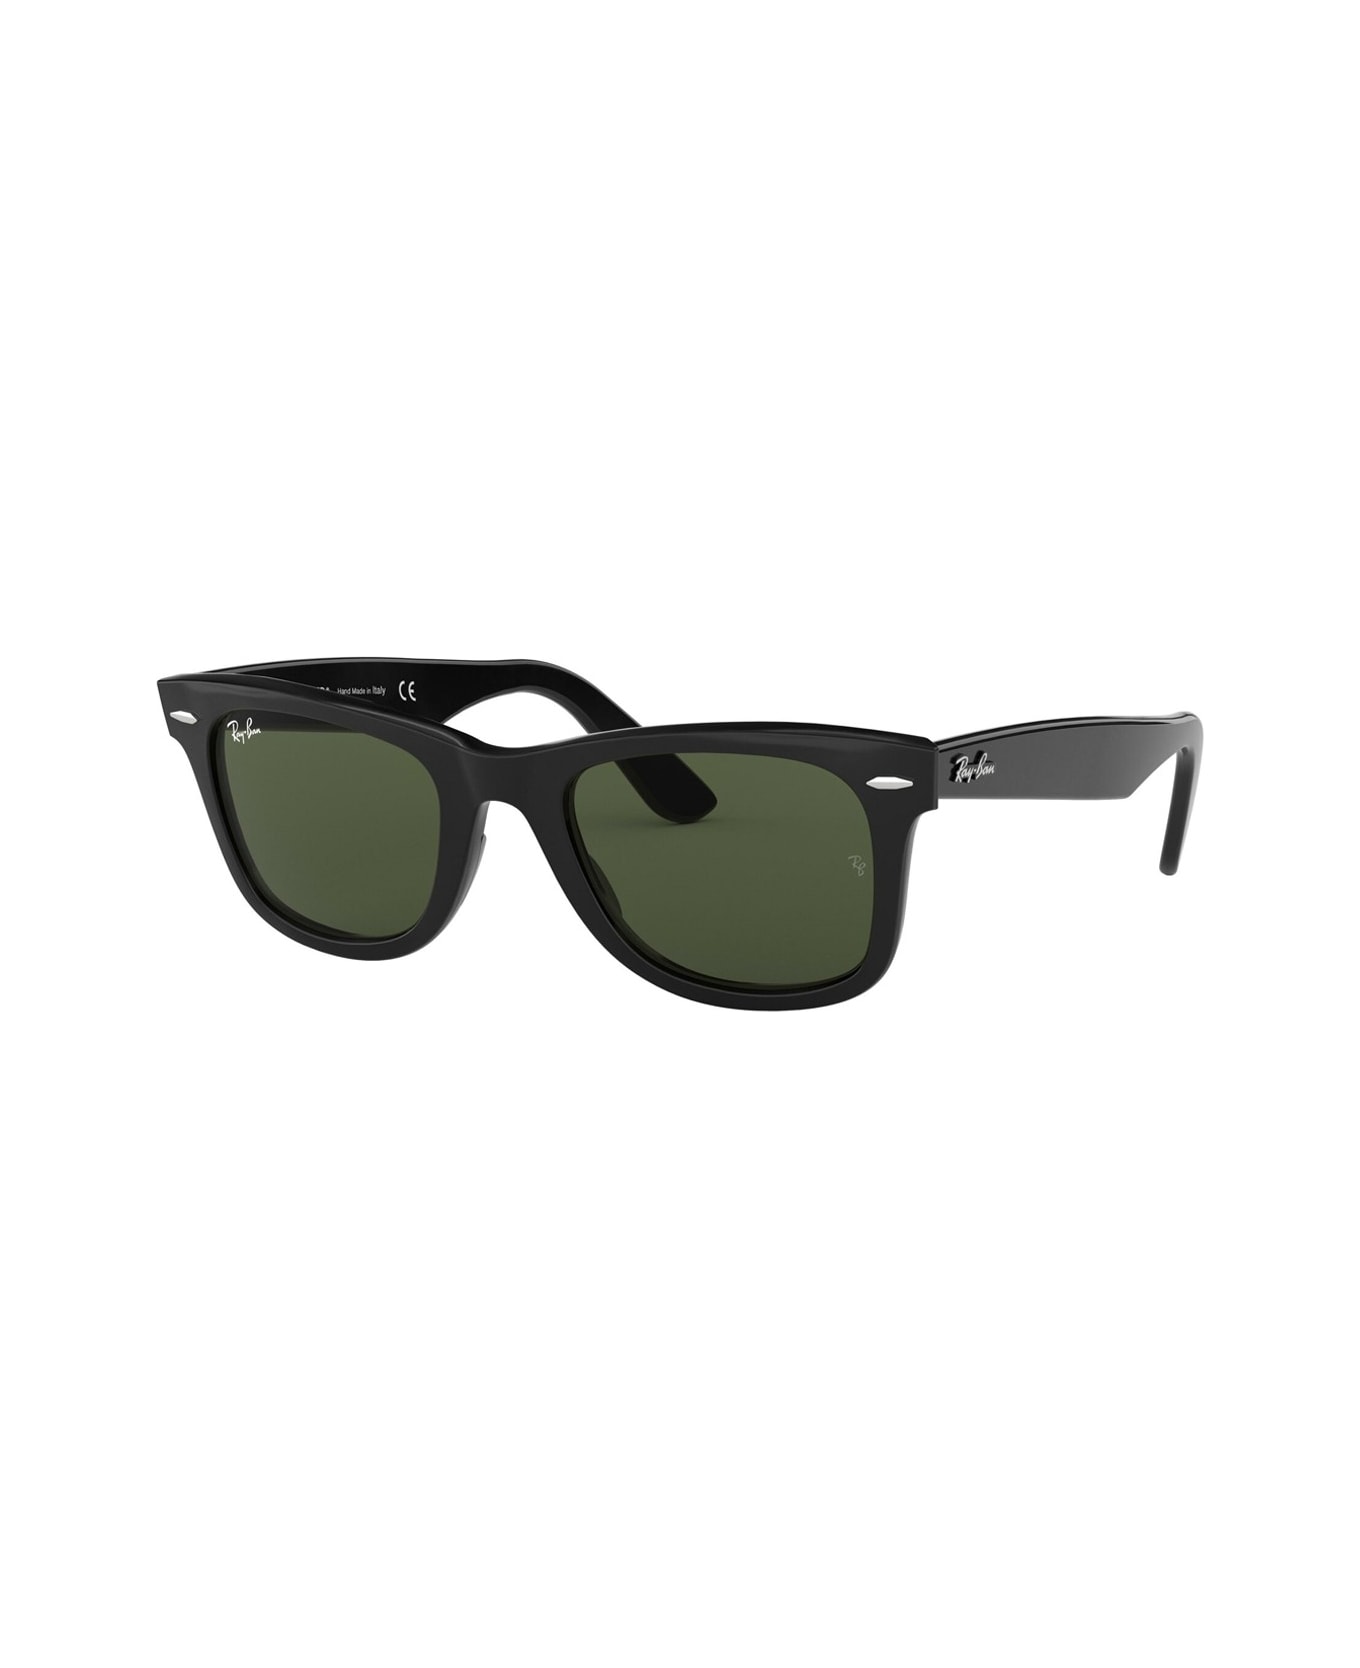 Ray-Ban Original Wayfarer Rb 2140 Sunglasses - Nero